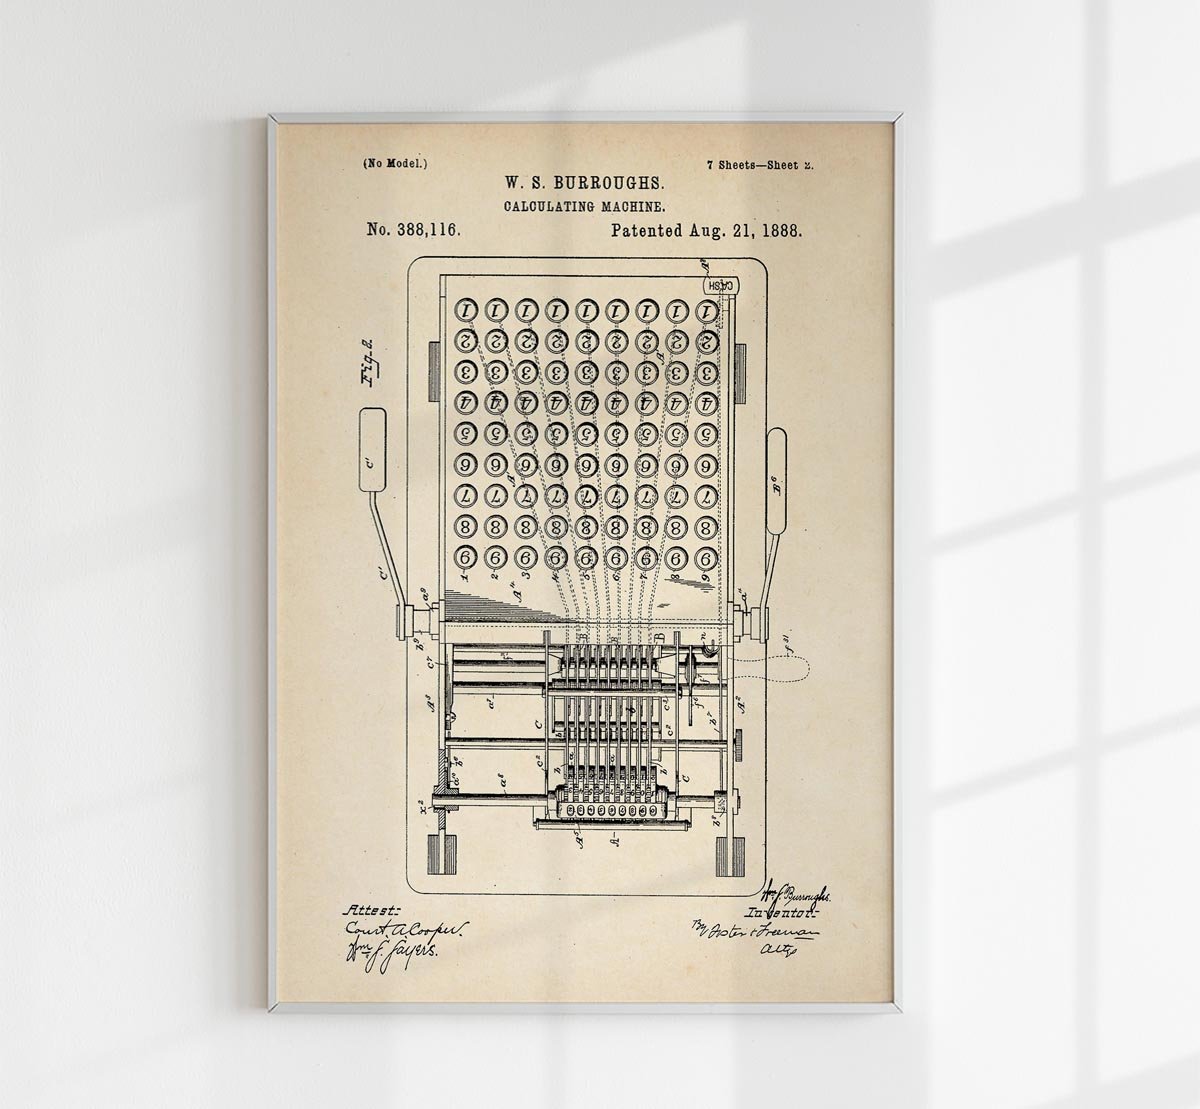 Calculating Machine Patent Poster